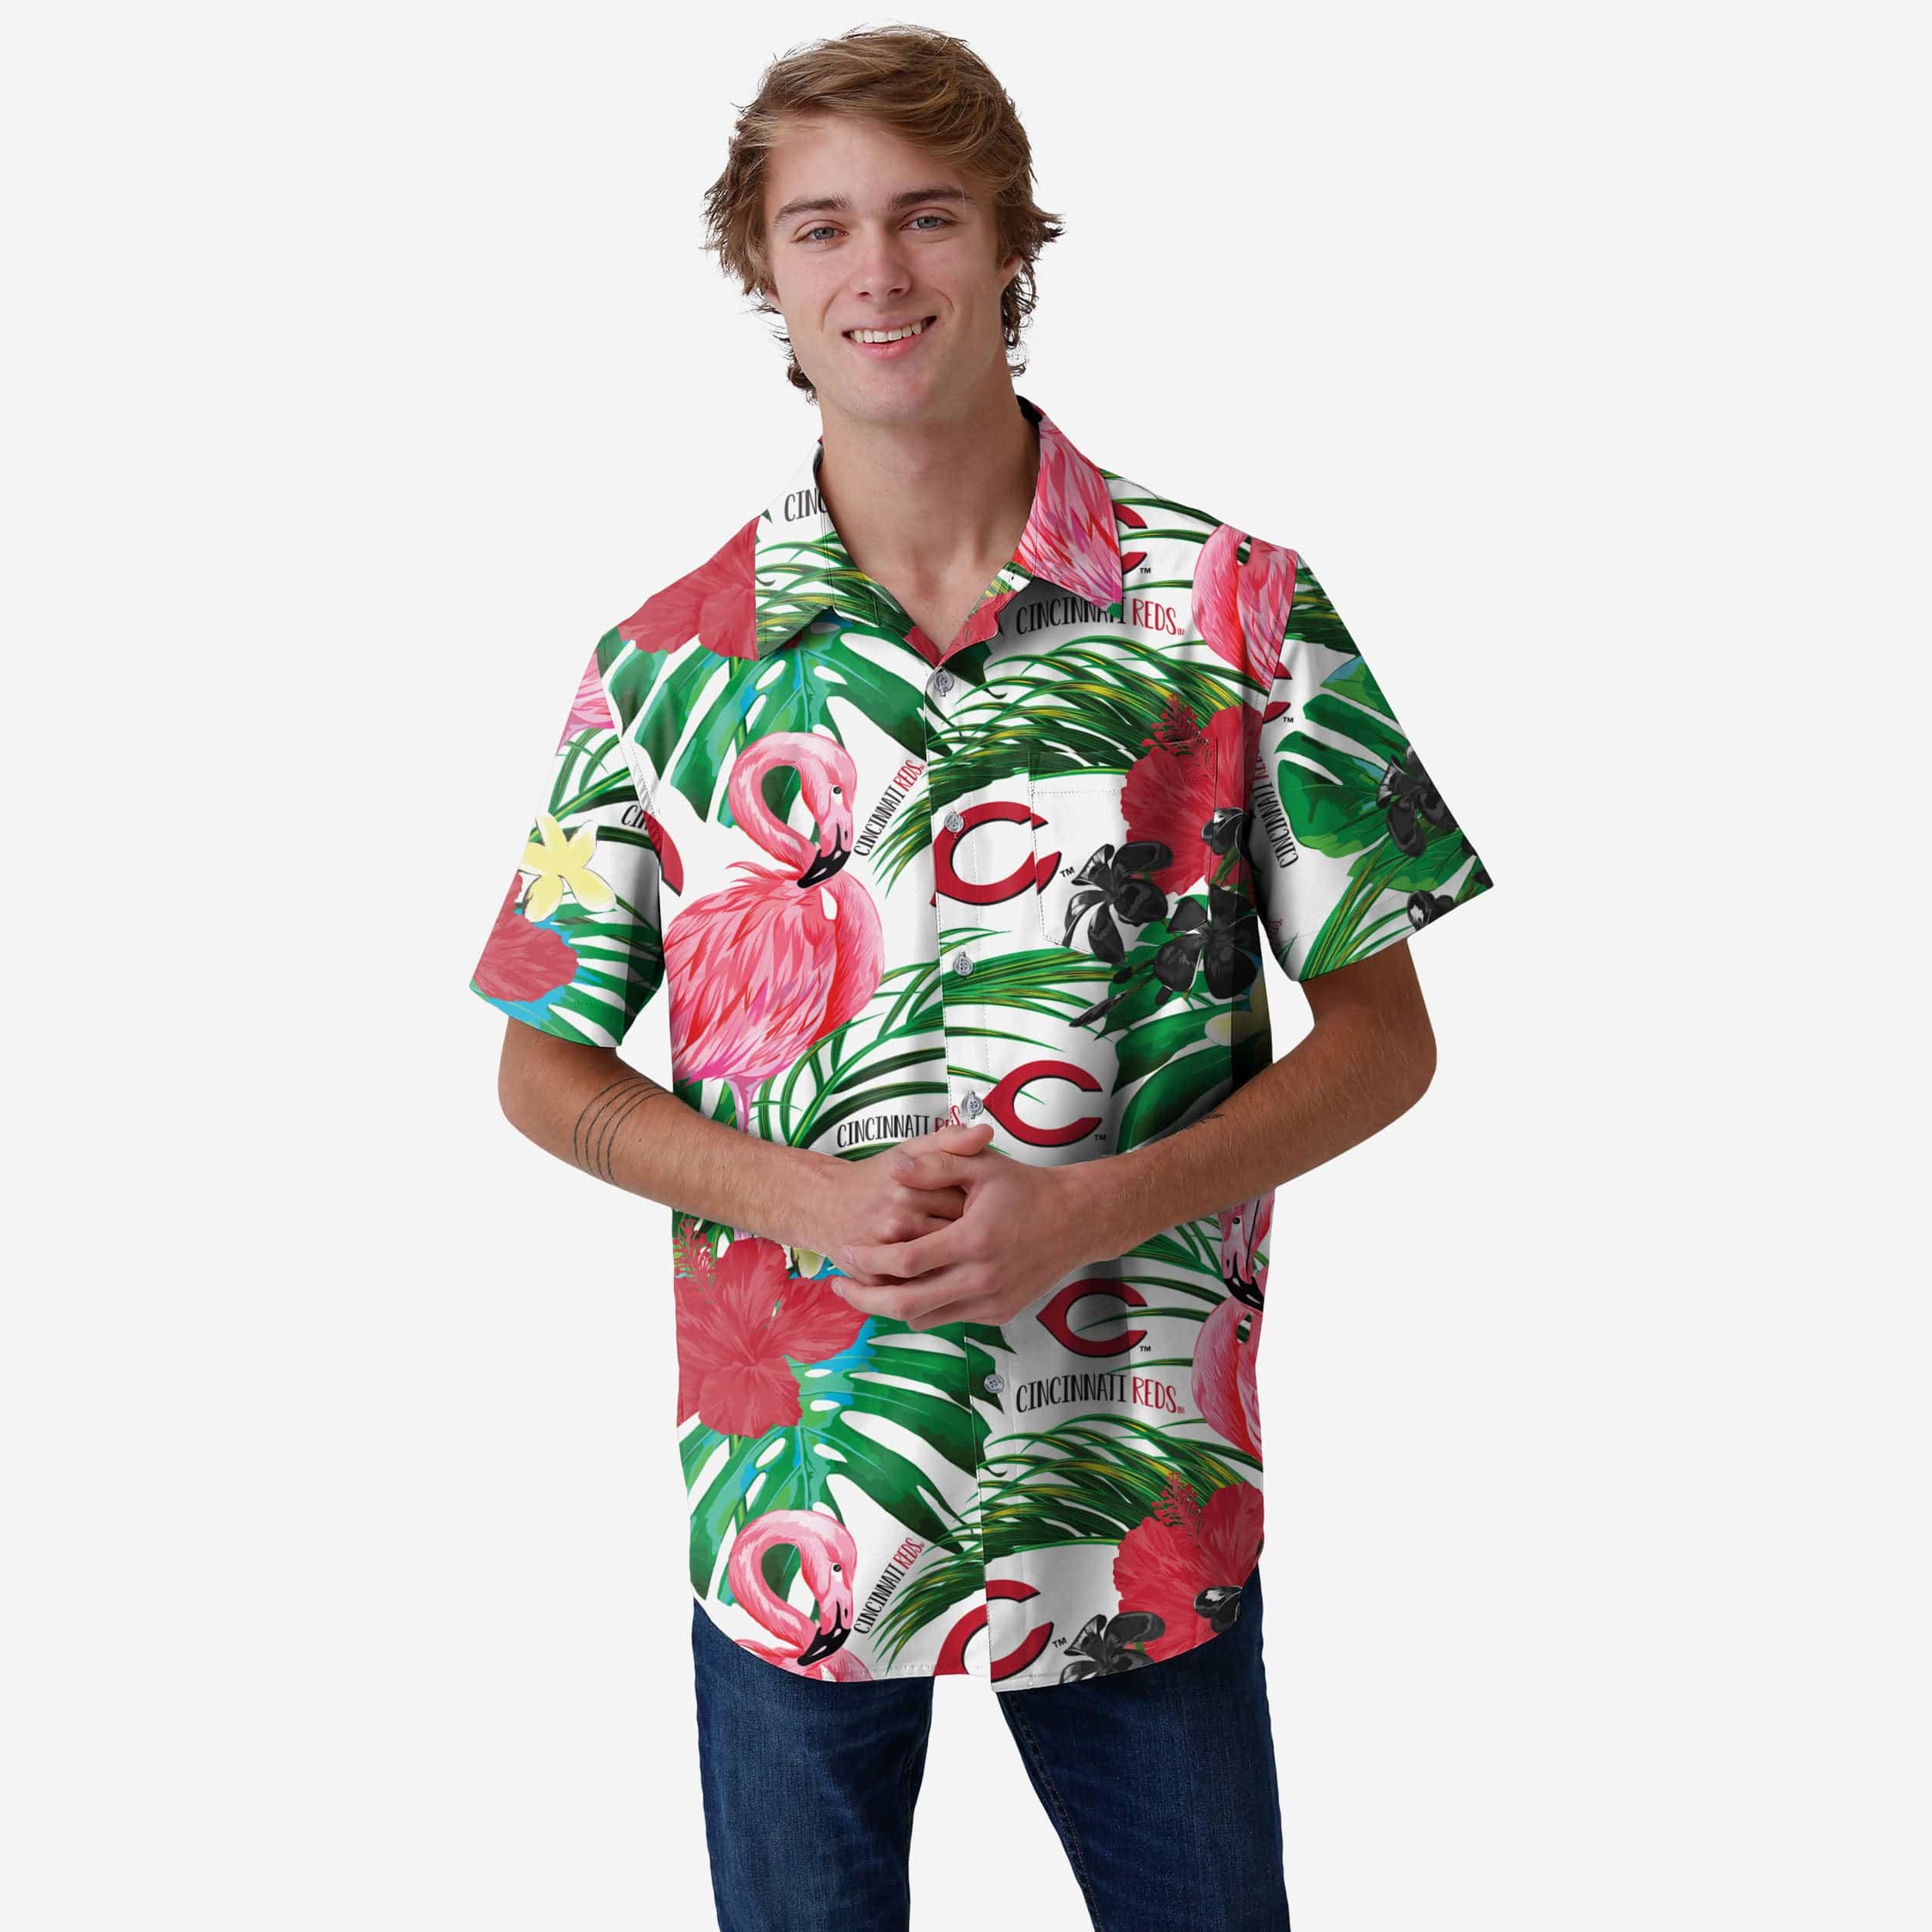 Cincinnati Reds MLB Hawaiian Shirt 2023 - Best Seller Shirts Design In Usa